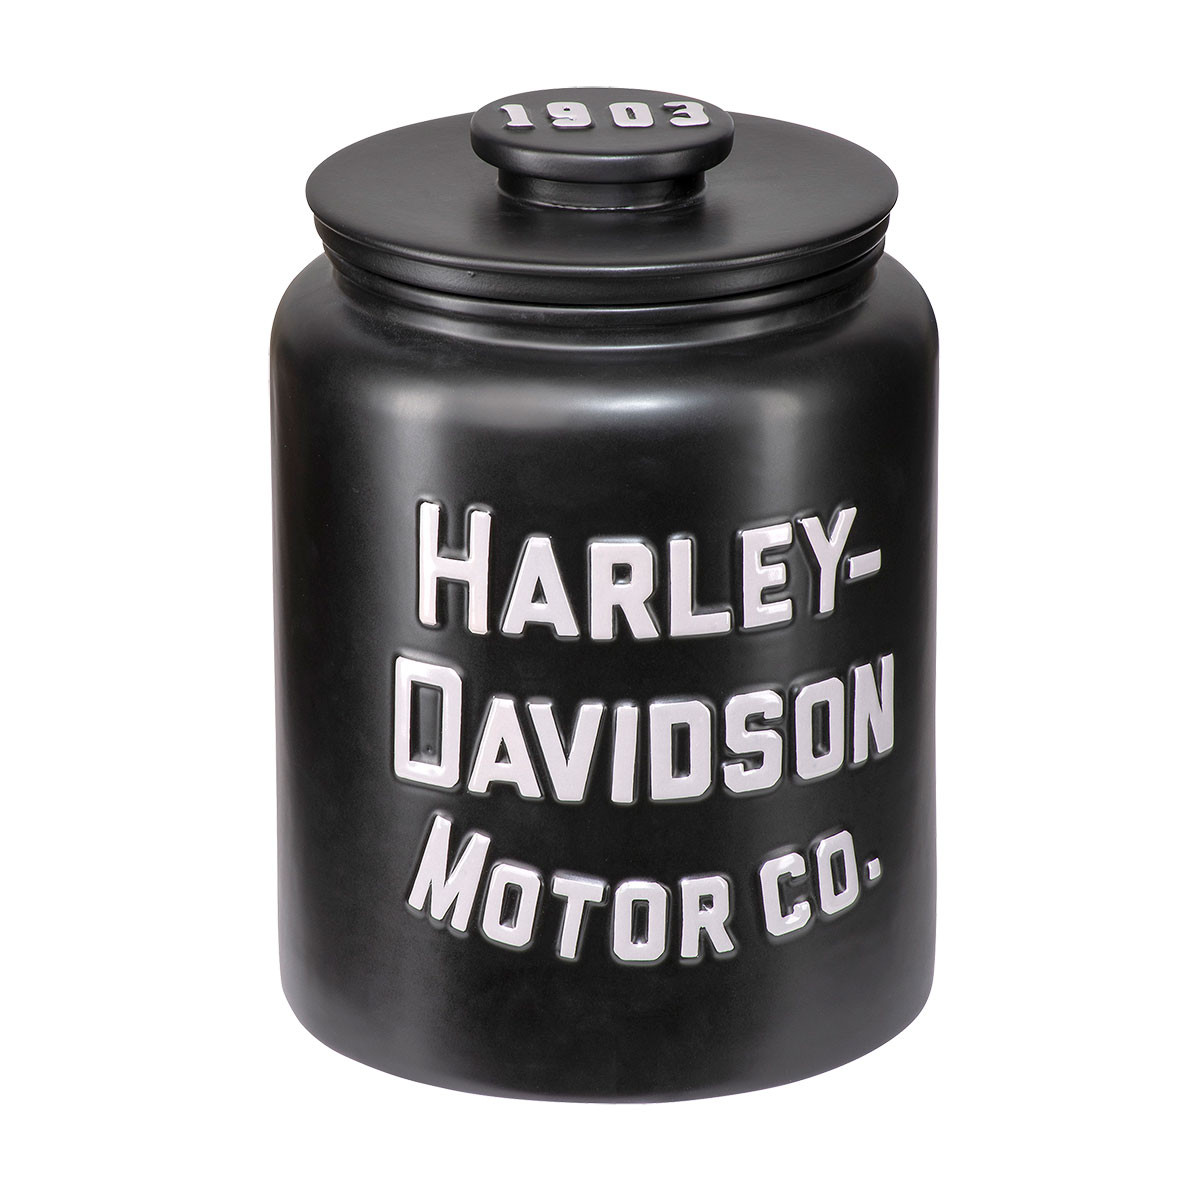 HARLEY DAVIDSON  MOTOR CO.